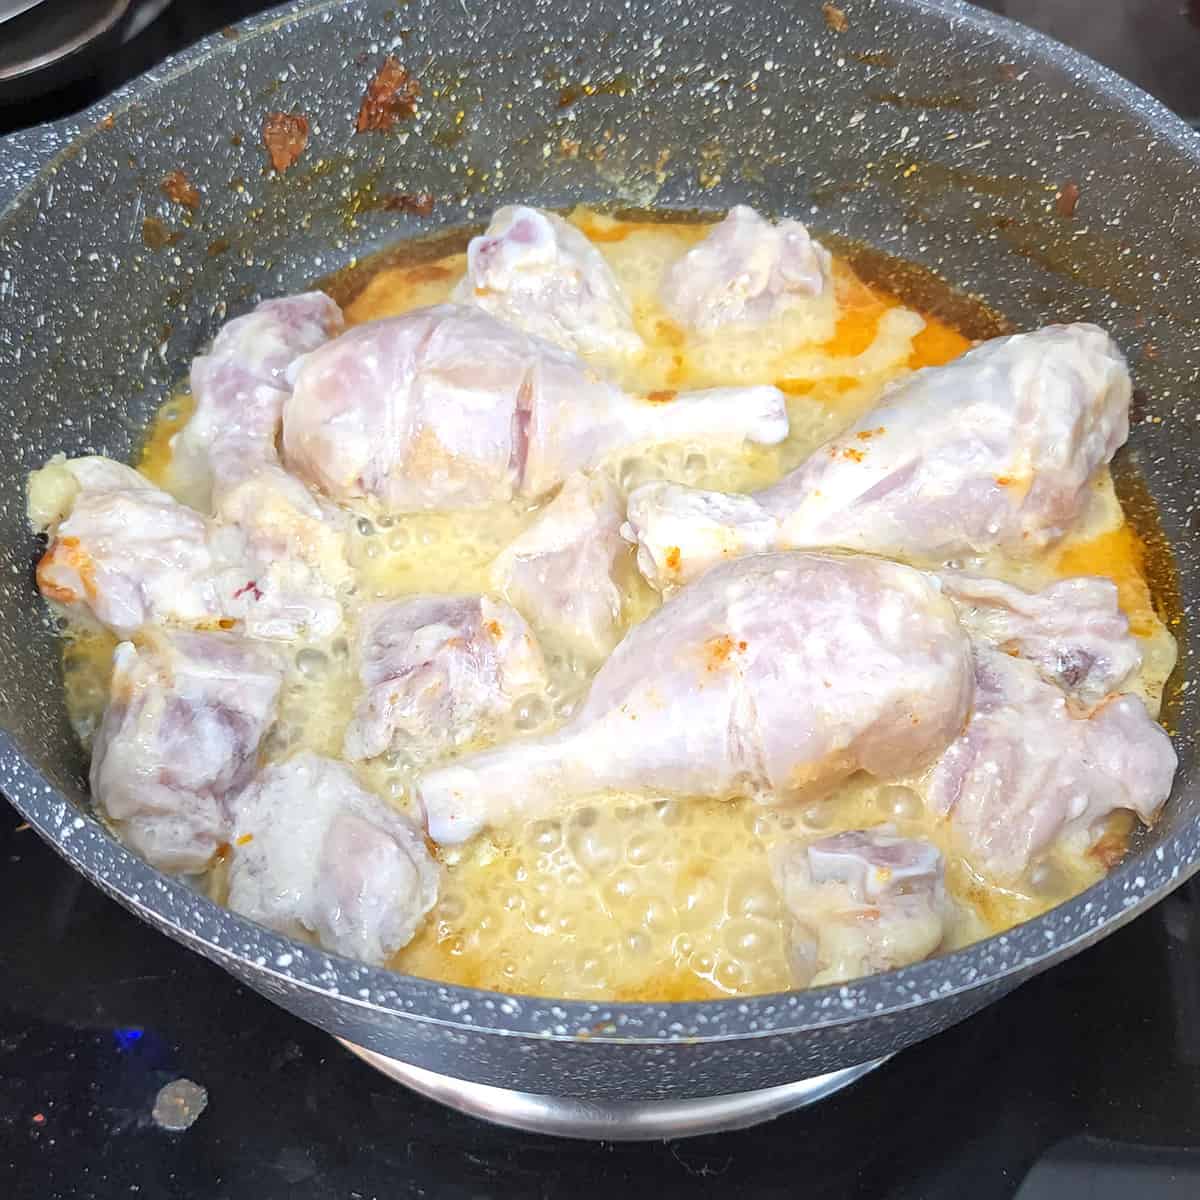 Add marinated chicken to a nonstick pan on medium-high heat.